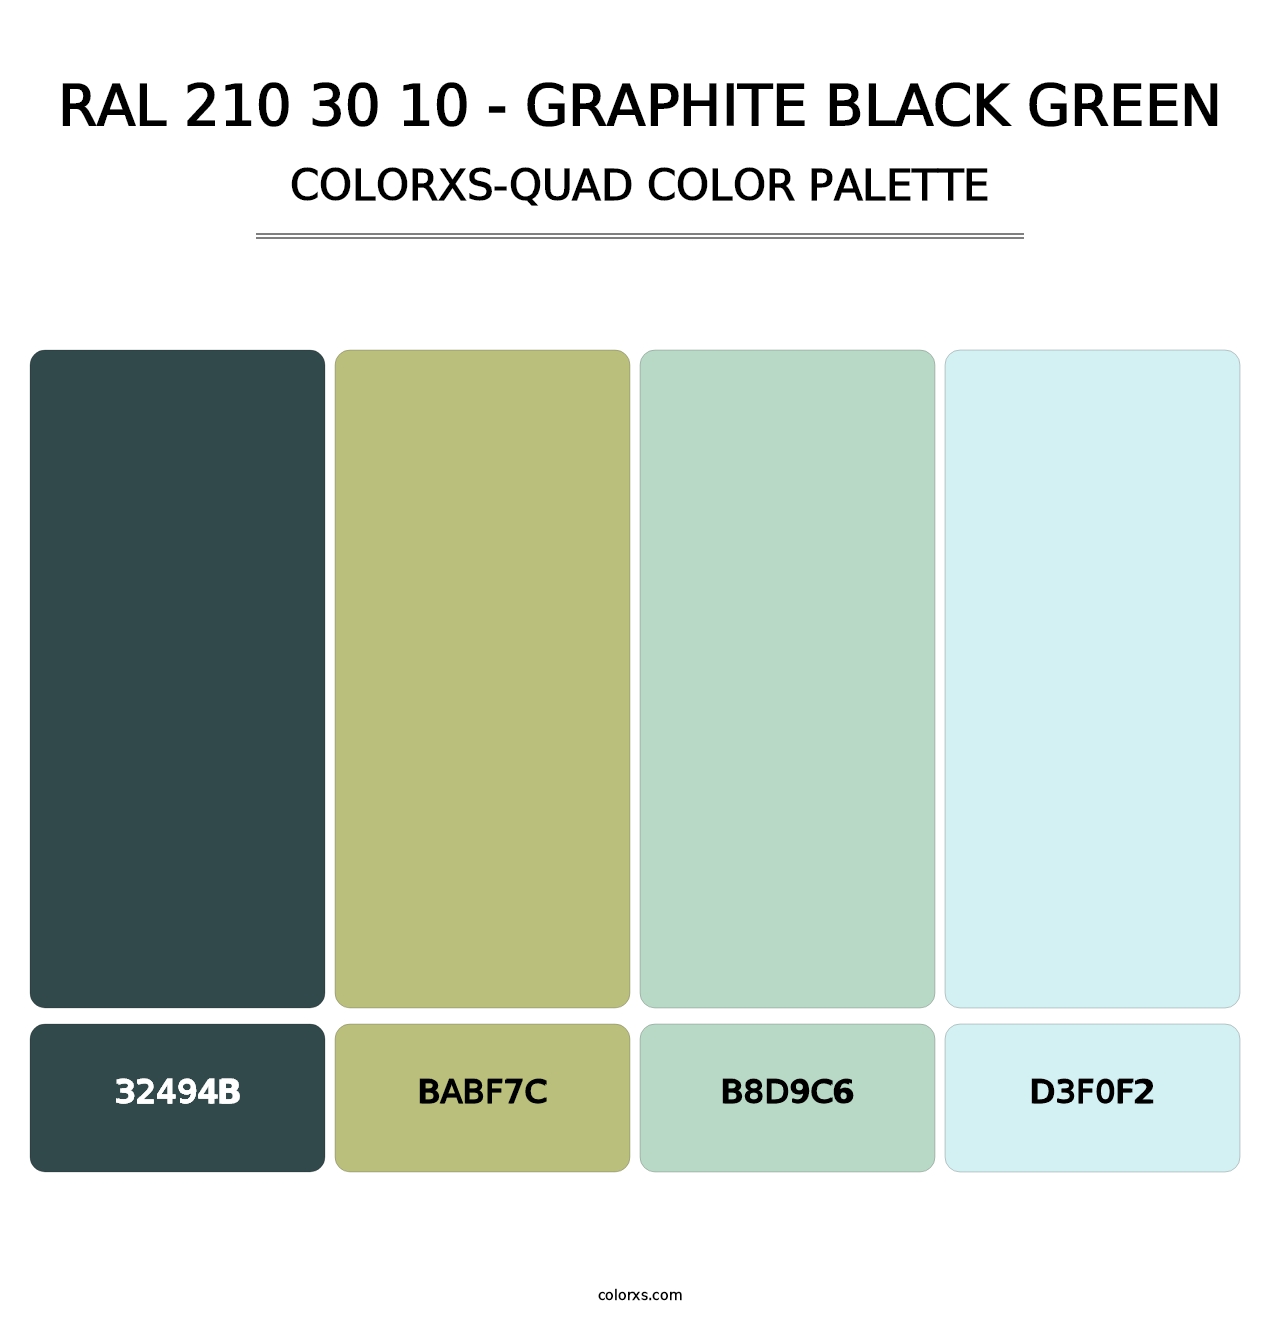 RAL 210 30 10 - Graphite Black Green - Colorxs Quad Palette